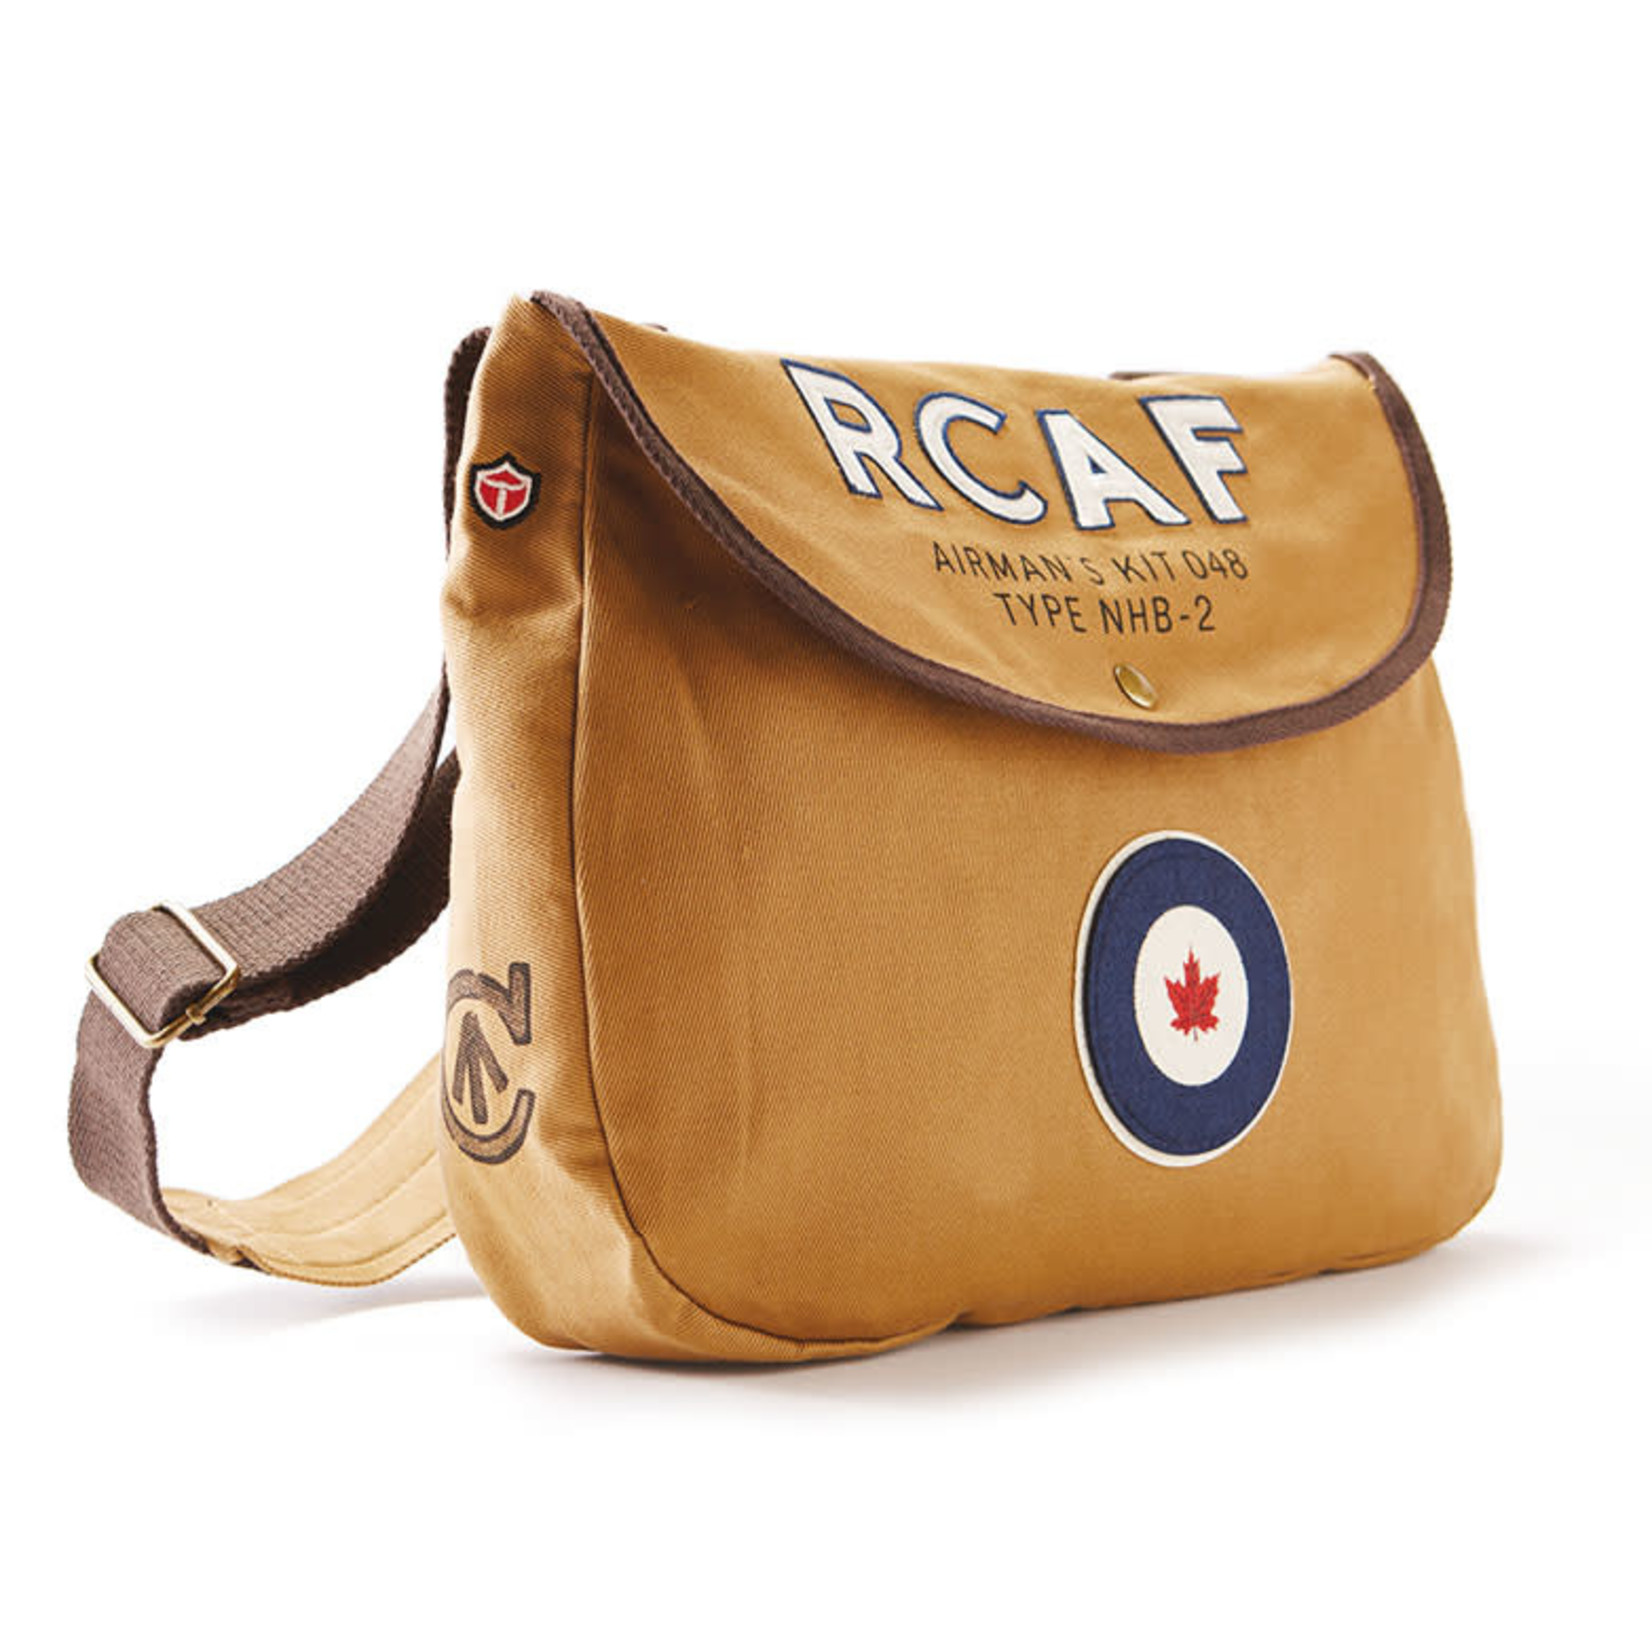 Aviation and Space Shoulder Bag RCAF